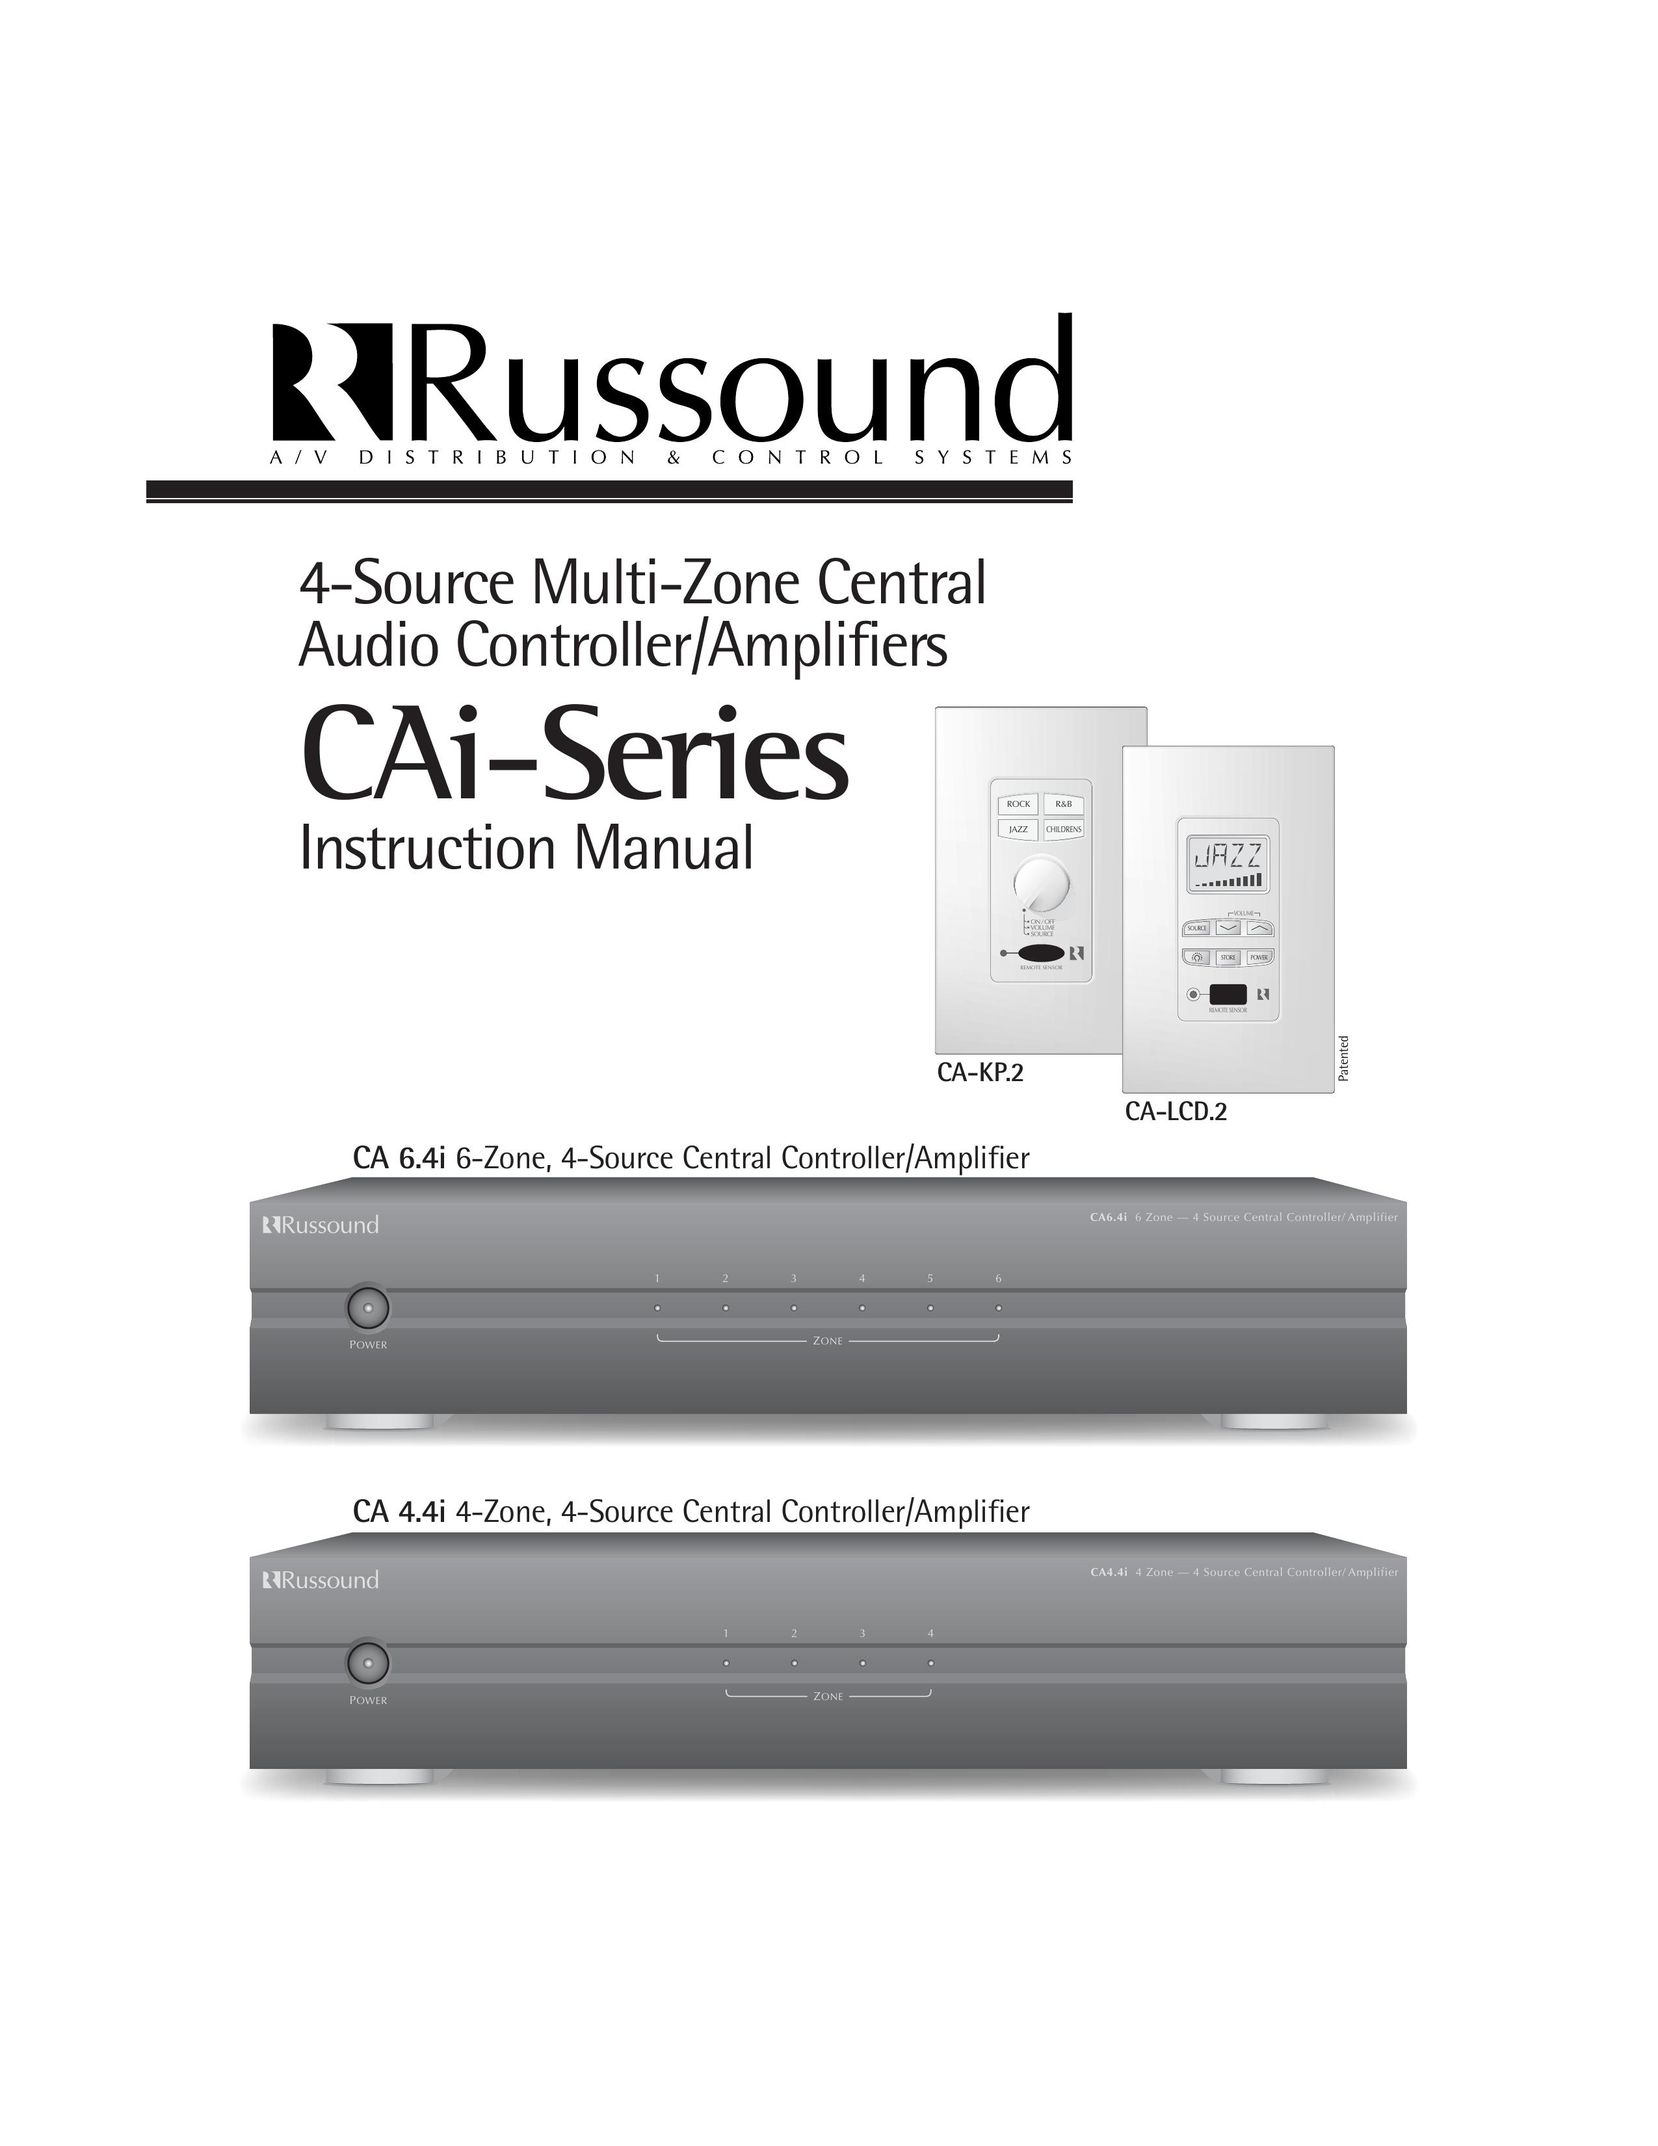 Russound CA-LCD.2 Speaker System User Manual